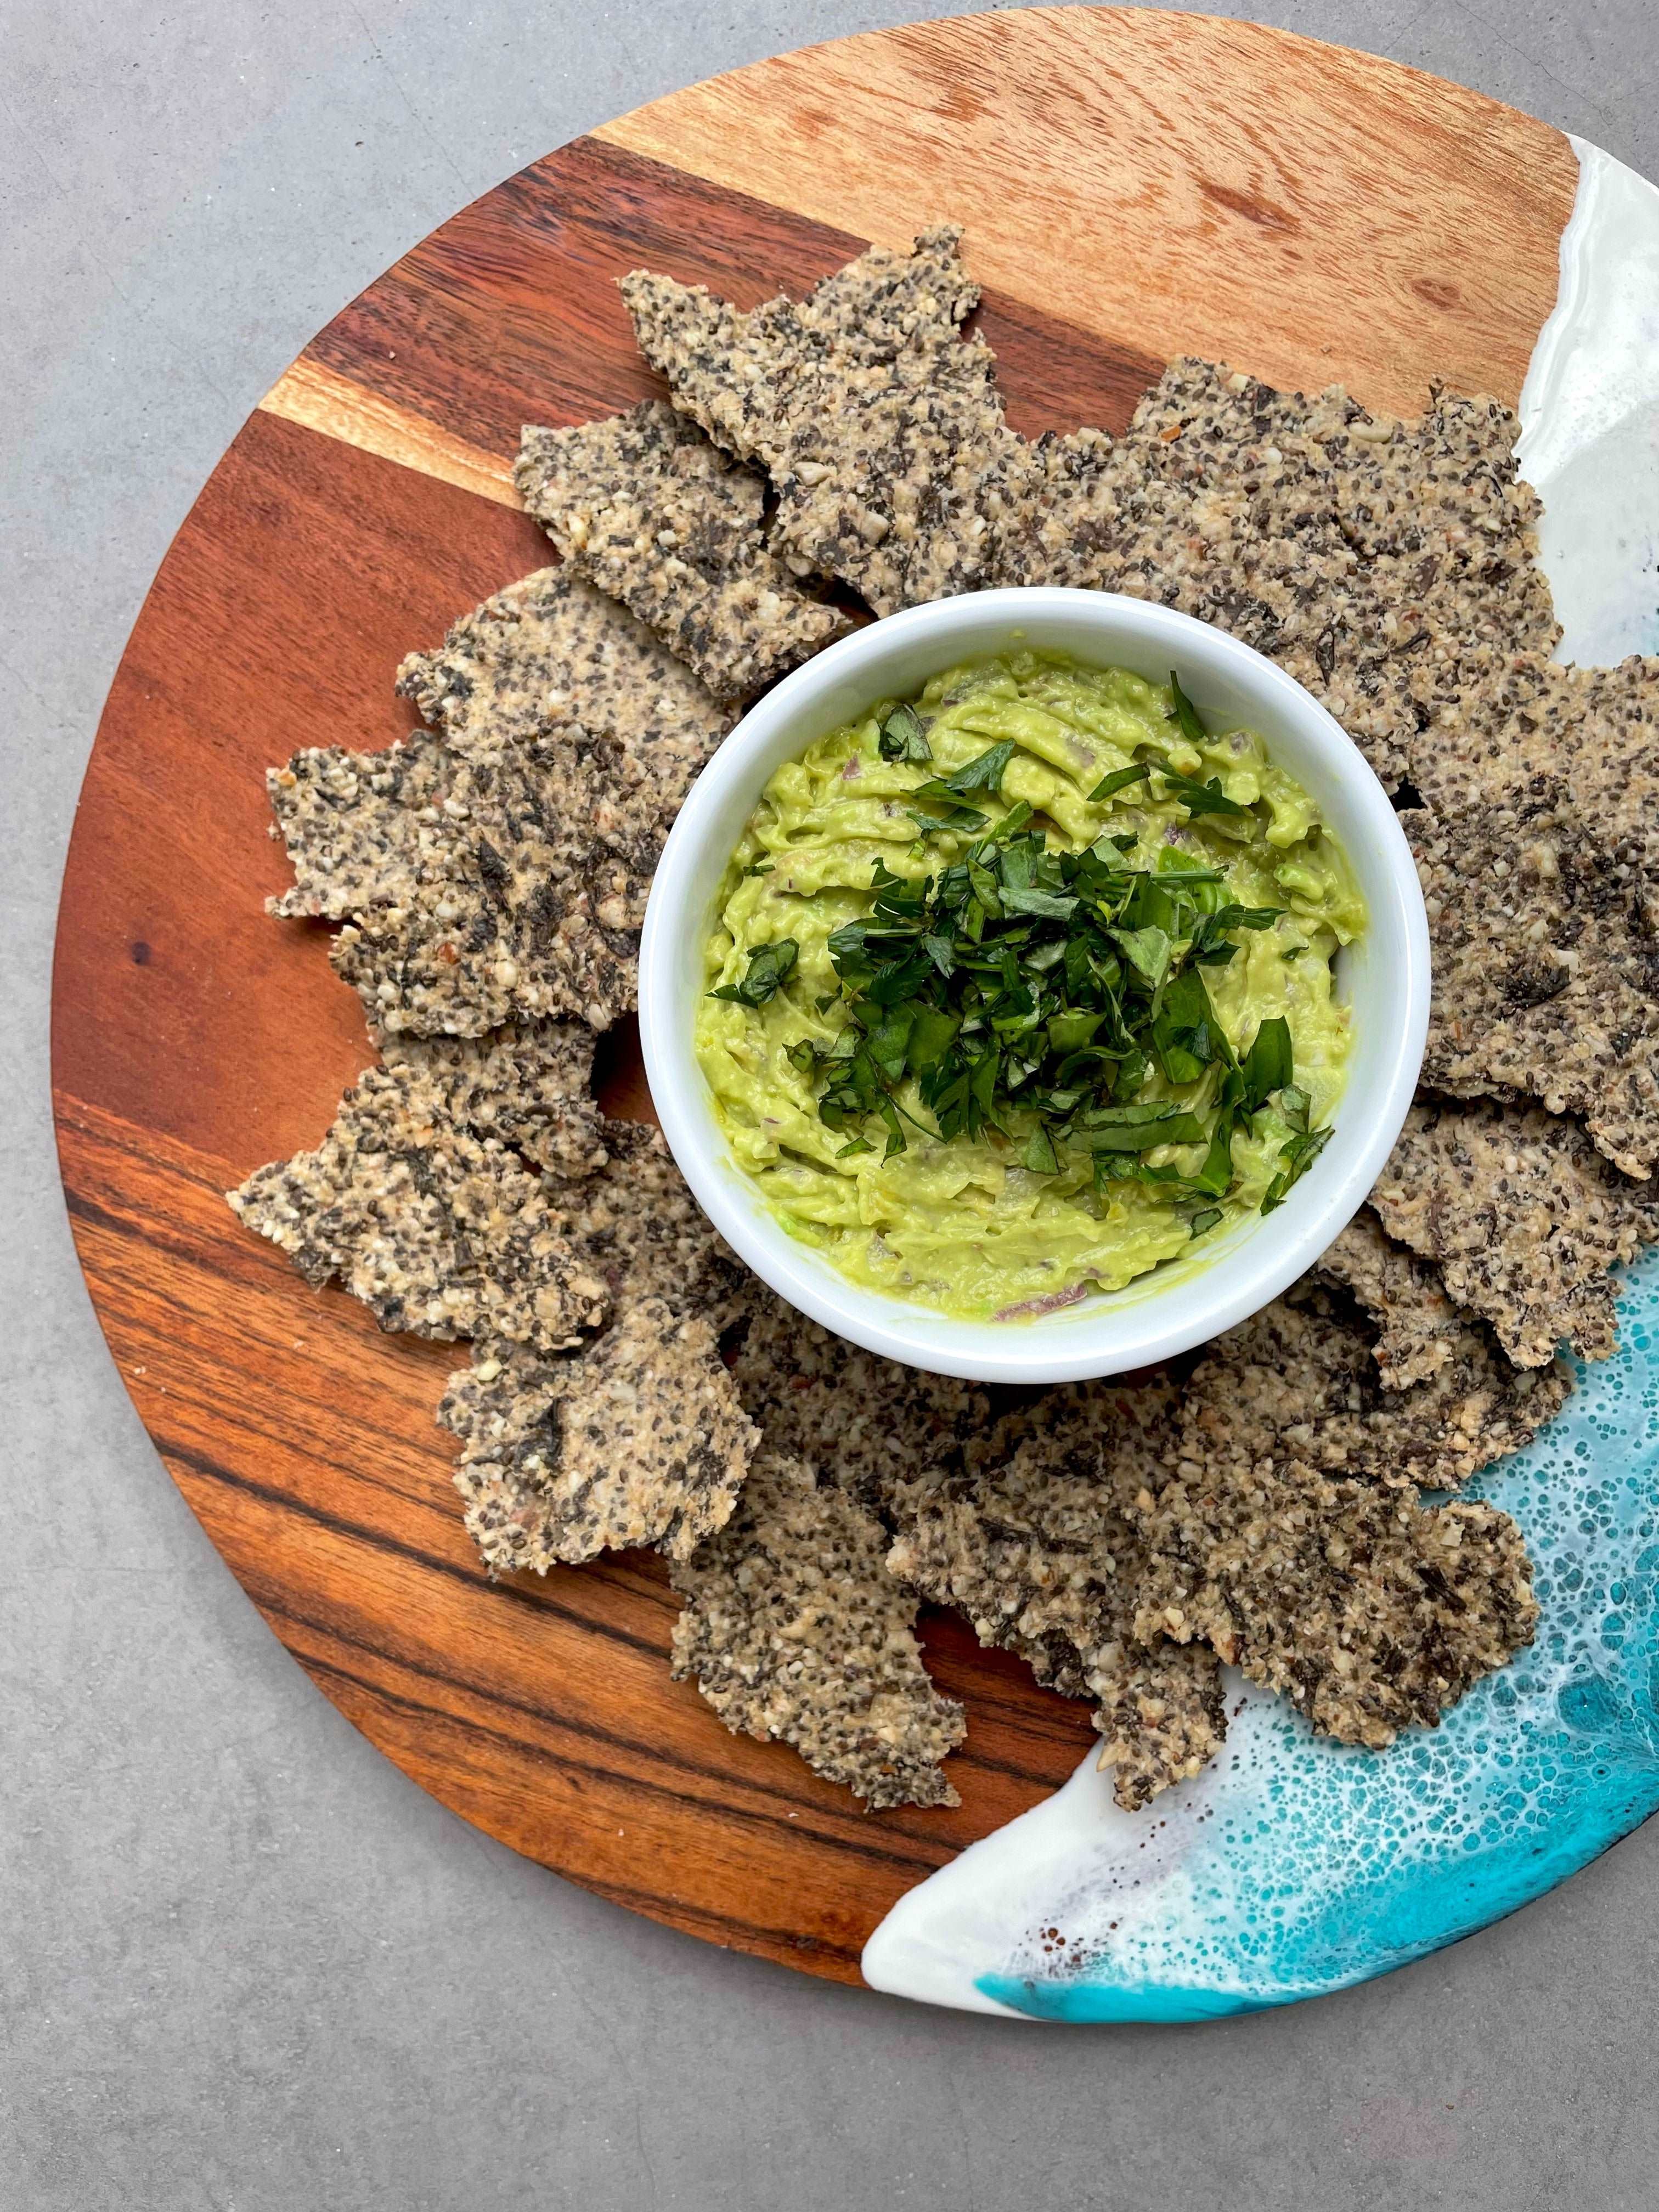 Furikake Seasonings (Seaweed & Sesame Blends, Gluten Free, Delicious, Vegan)